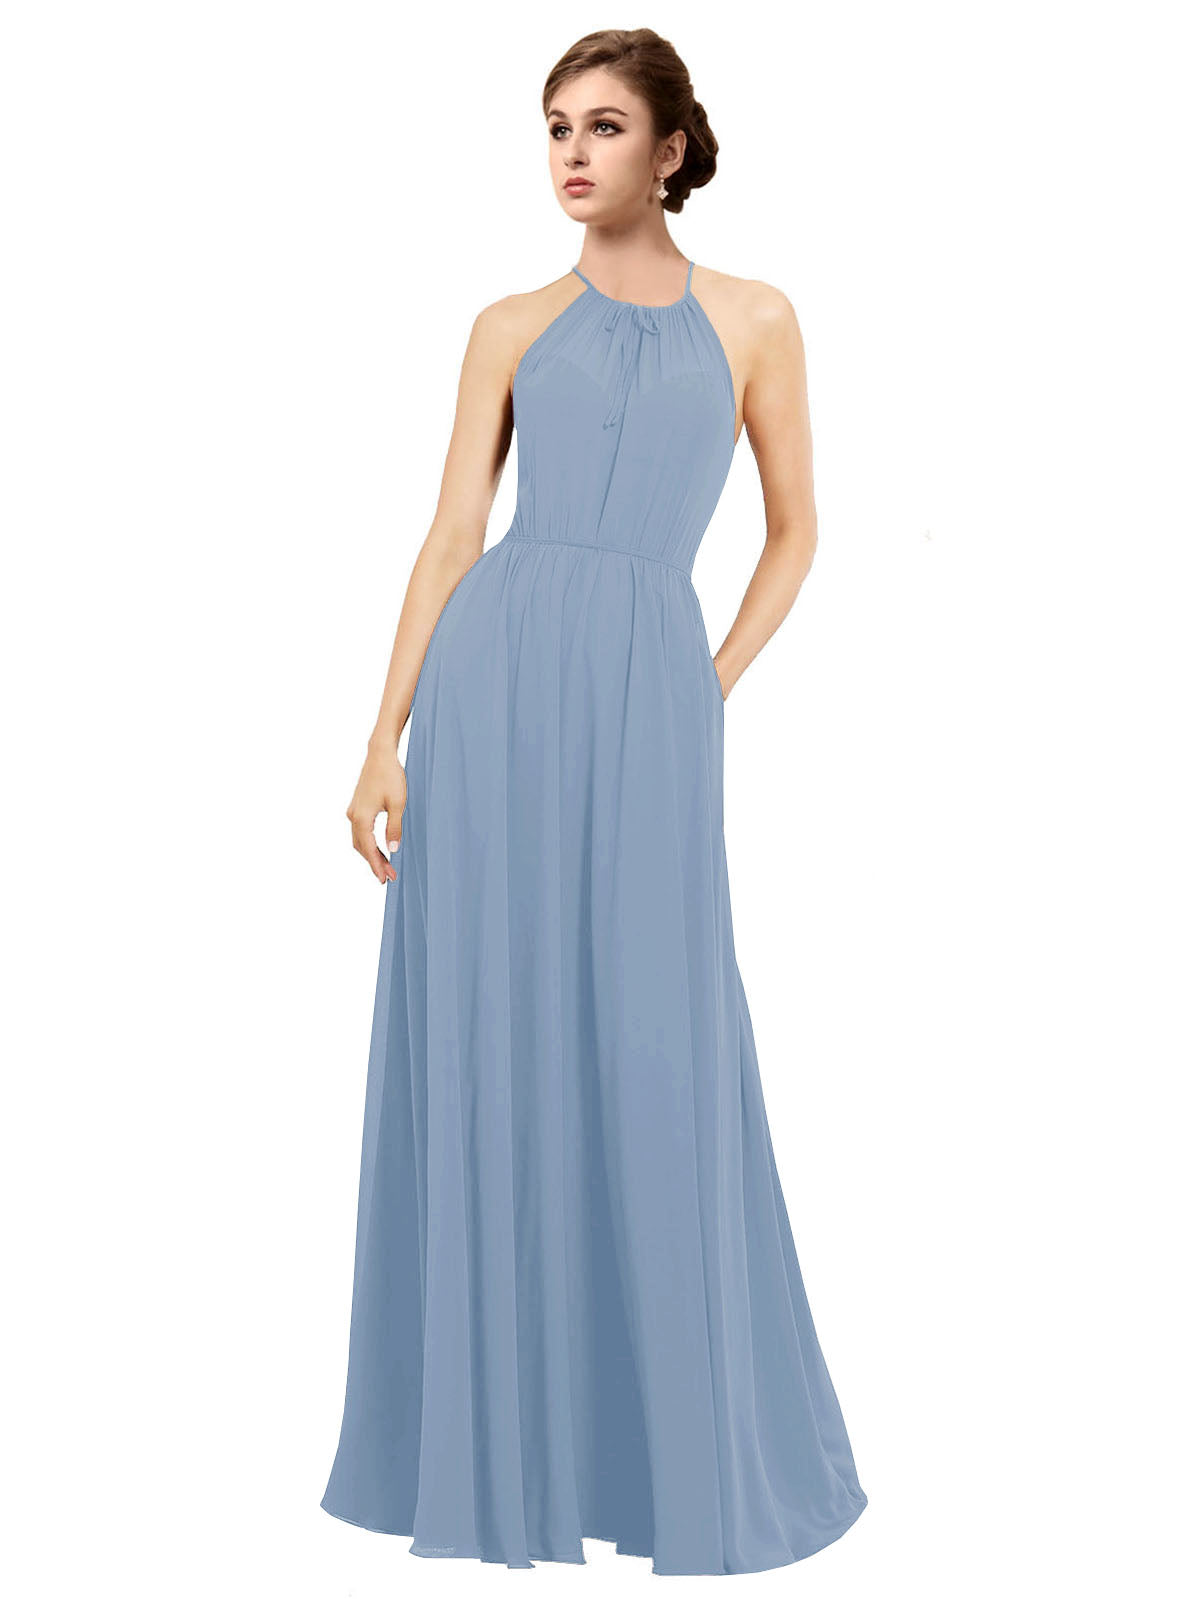 Dusty Blue A-Line Halter Sleeveless Long Bridesmaid Dress Taylor